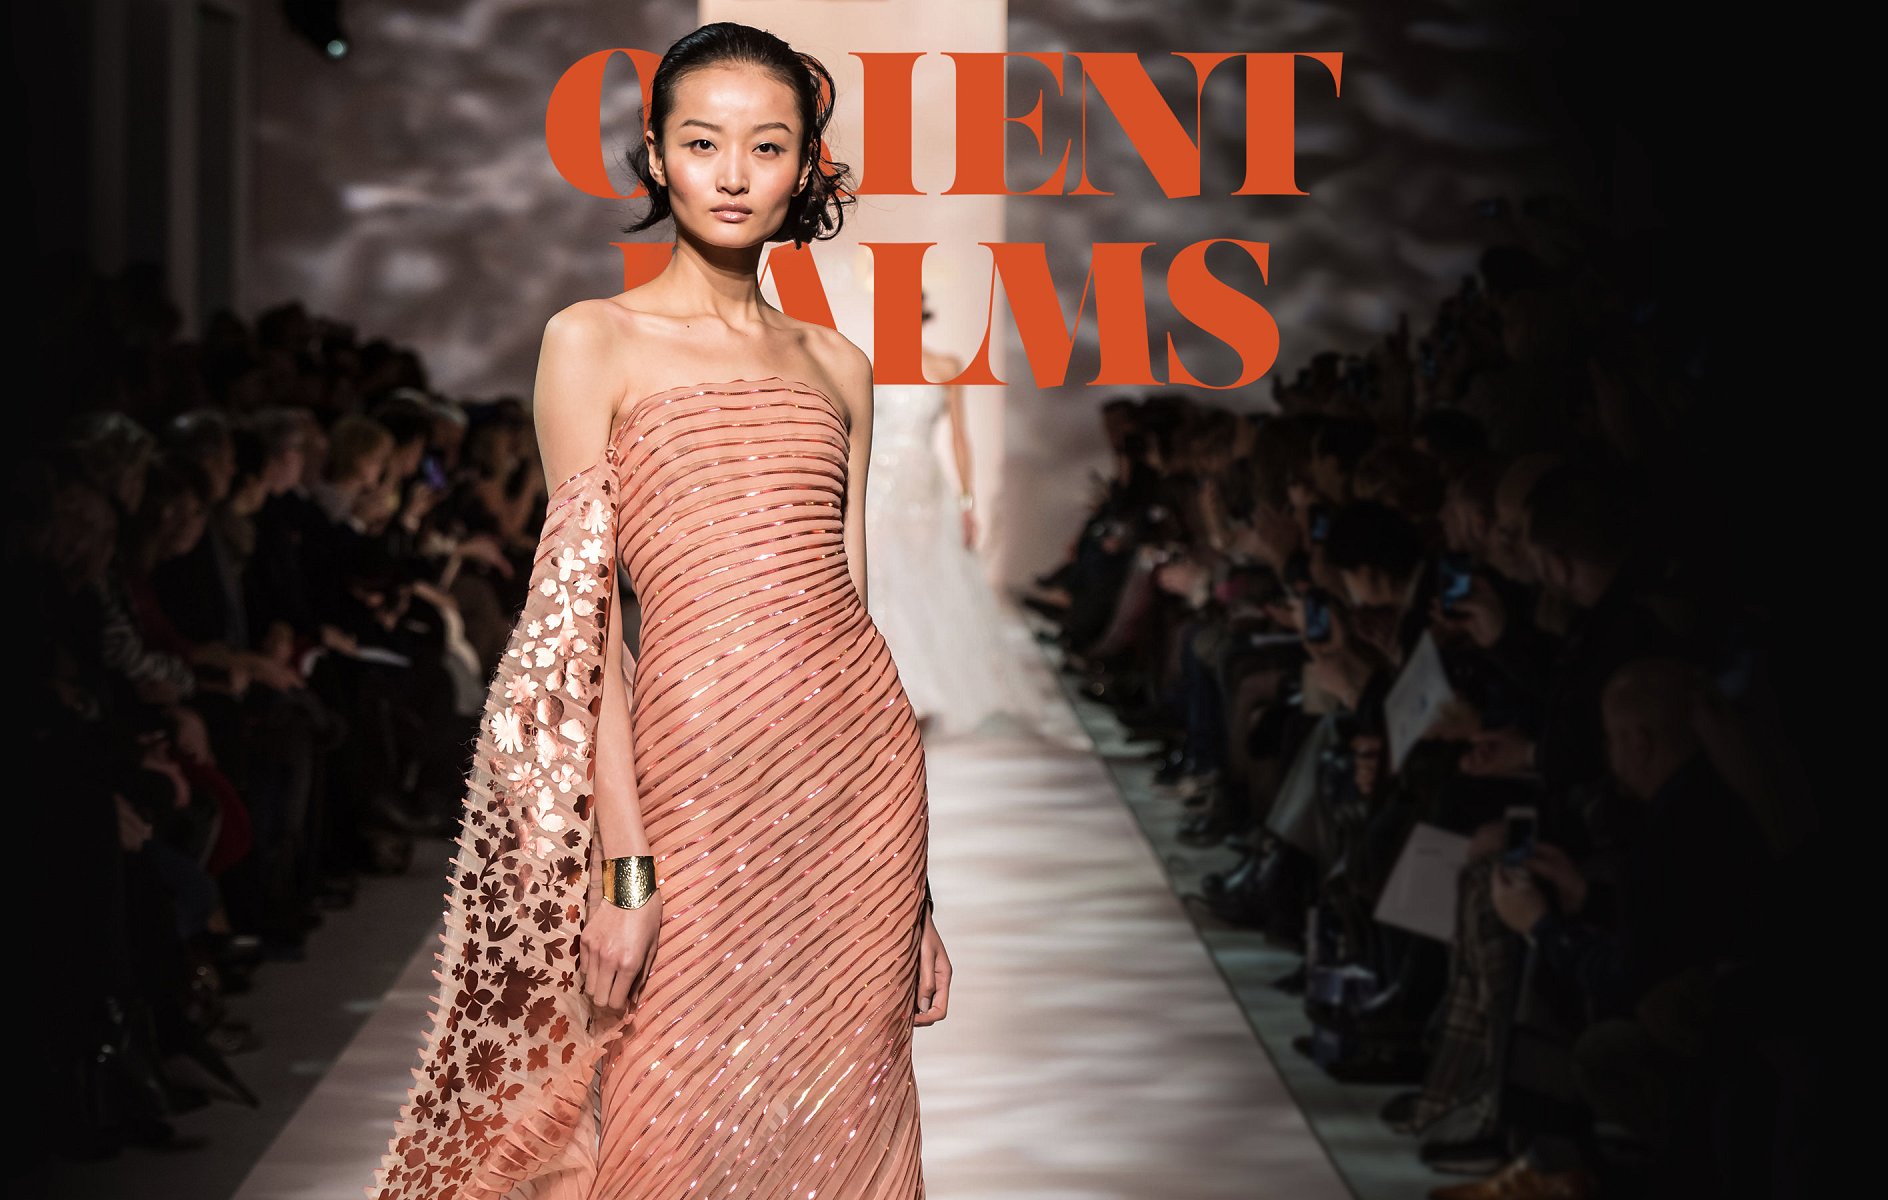 Chloe Bailey, Tom Daley & More Attend Louis Vuitton Paris Fashion